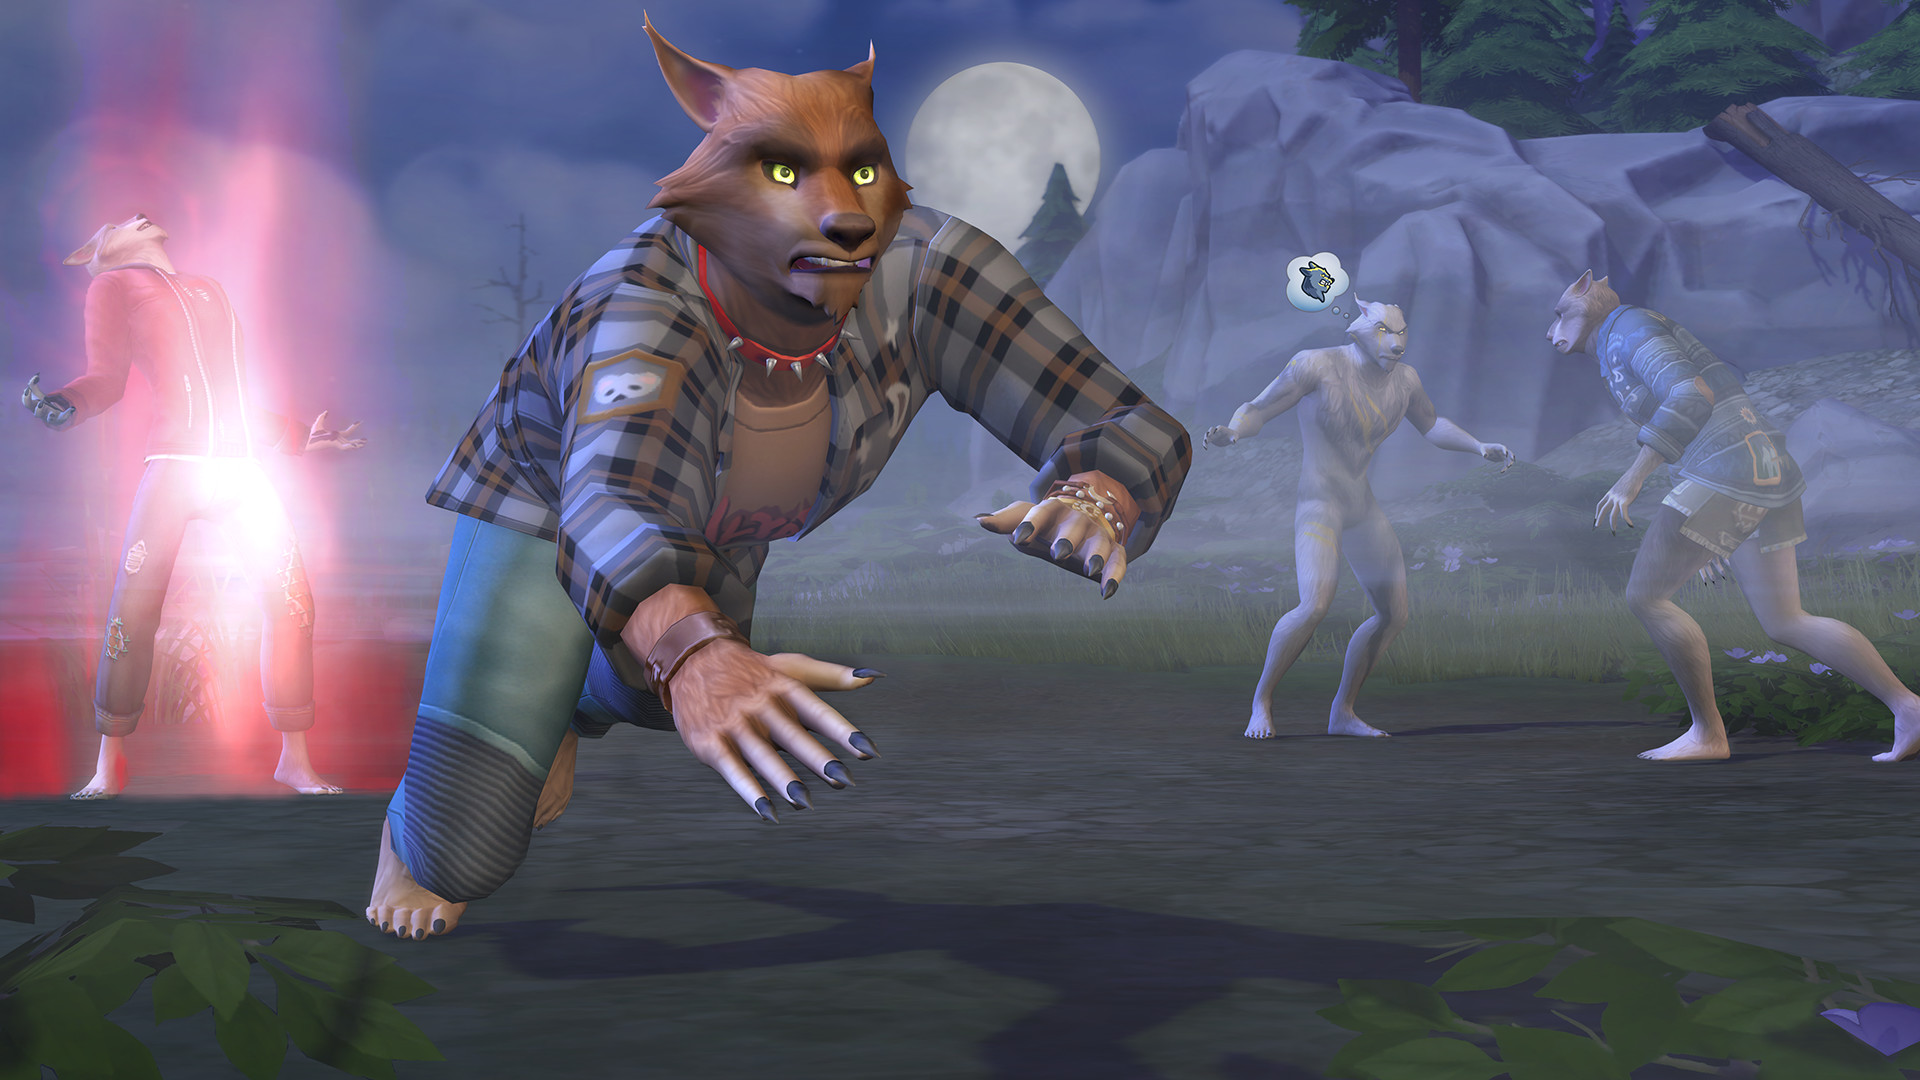 [$ 19.71] The Sims 4 - Werewolves Game Pack DLC EU Origin CD Key